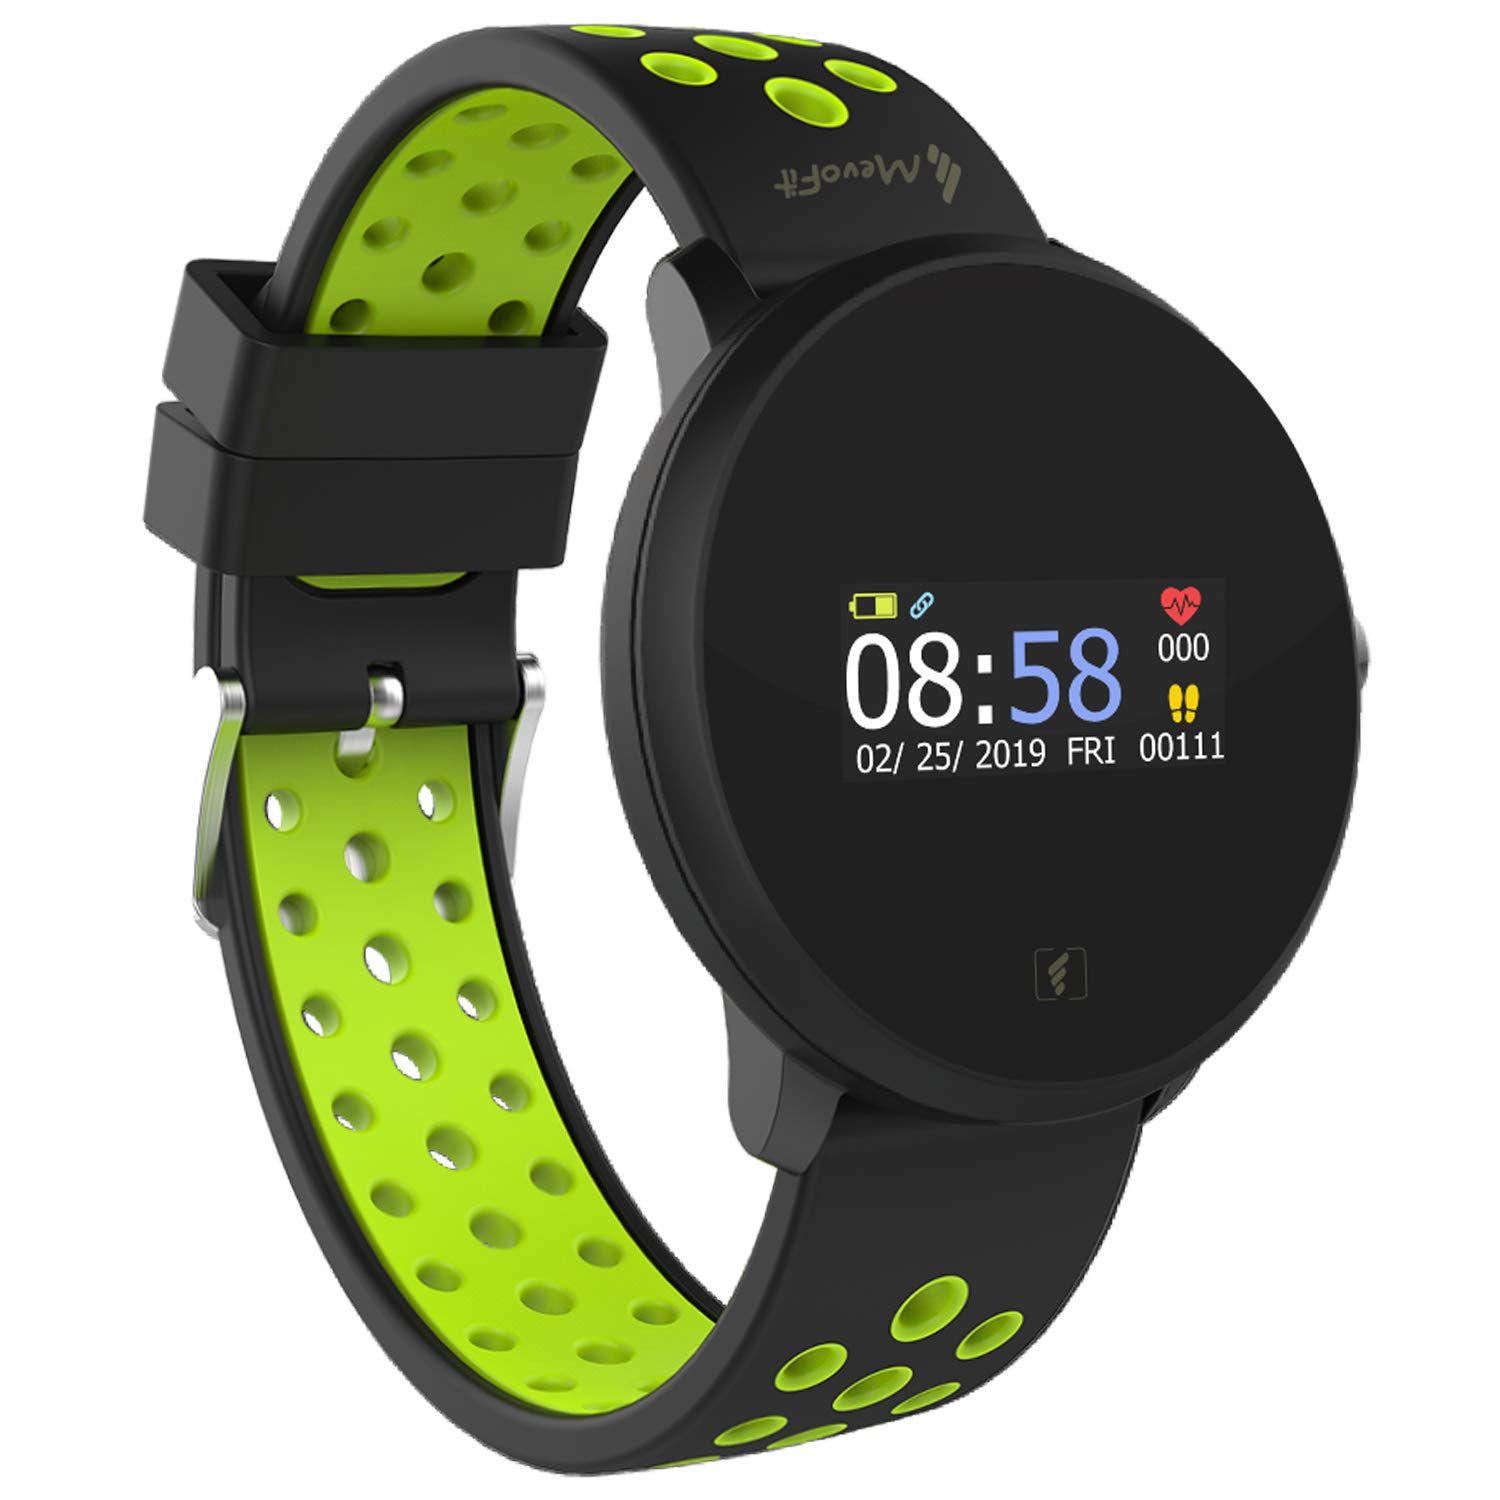 MevoFit Dive Smartwatch: Fitness Smartwatch an Activity Tracker for Men and Women [Green]